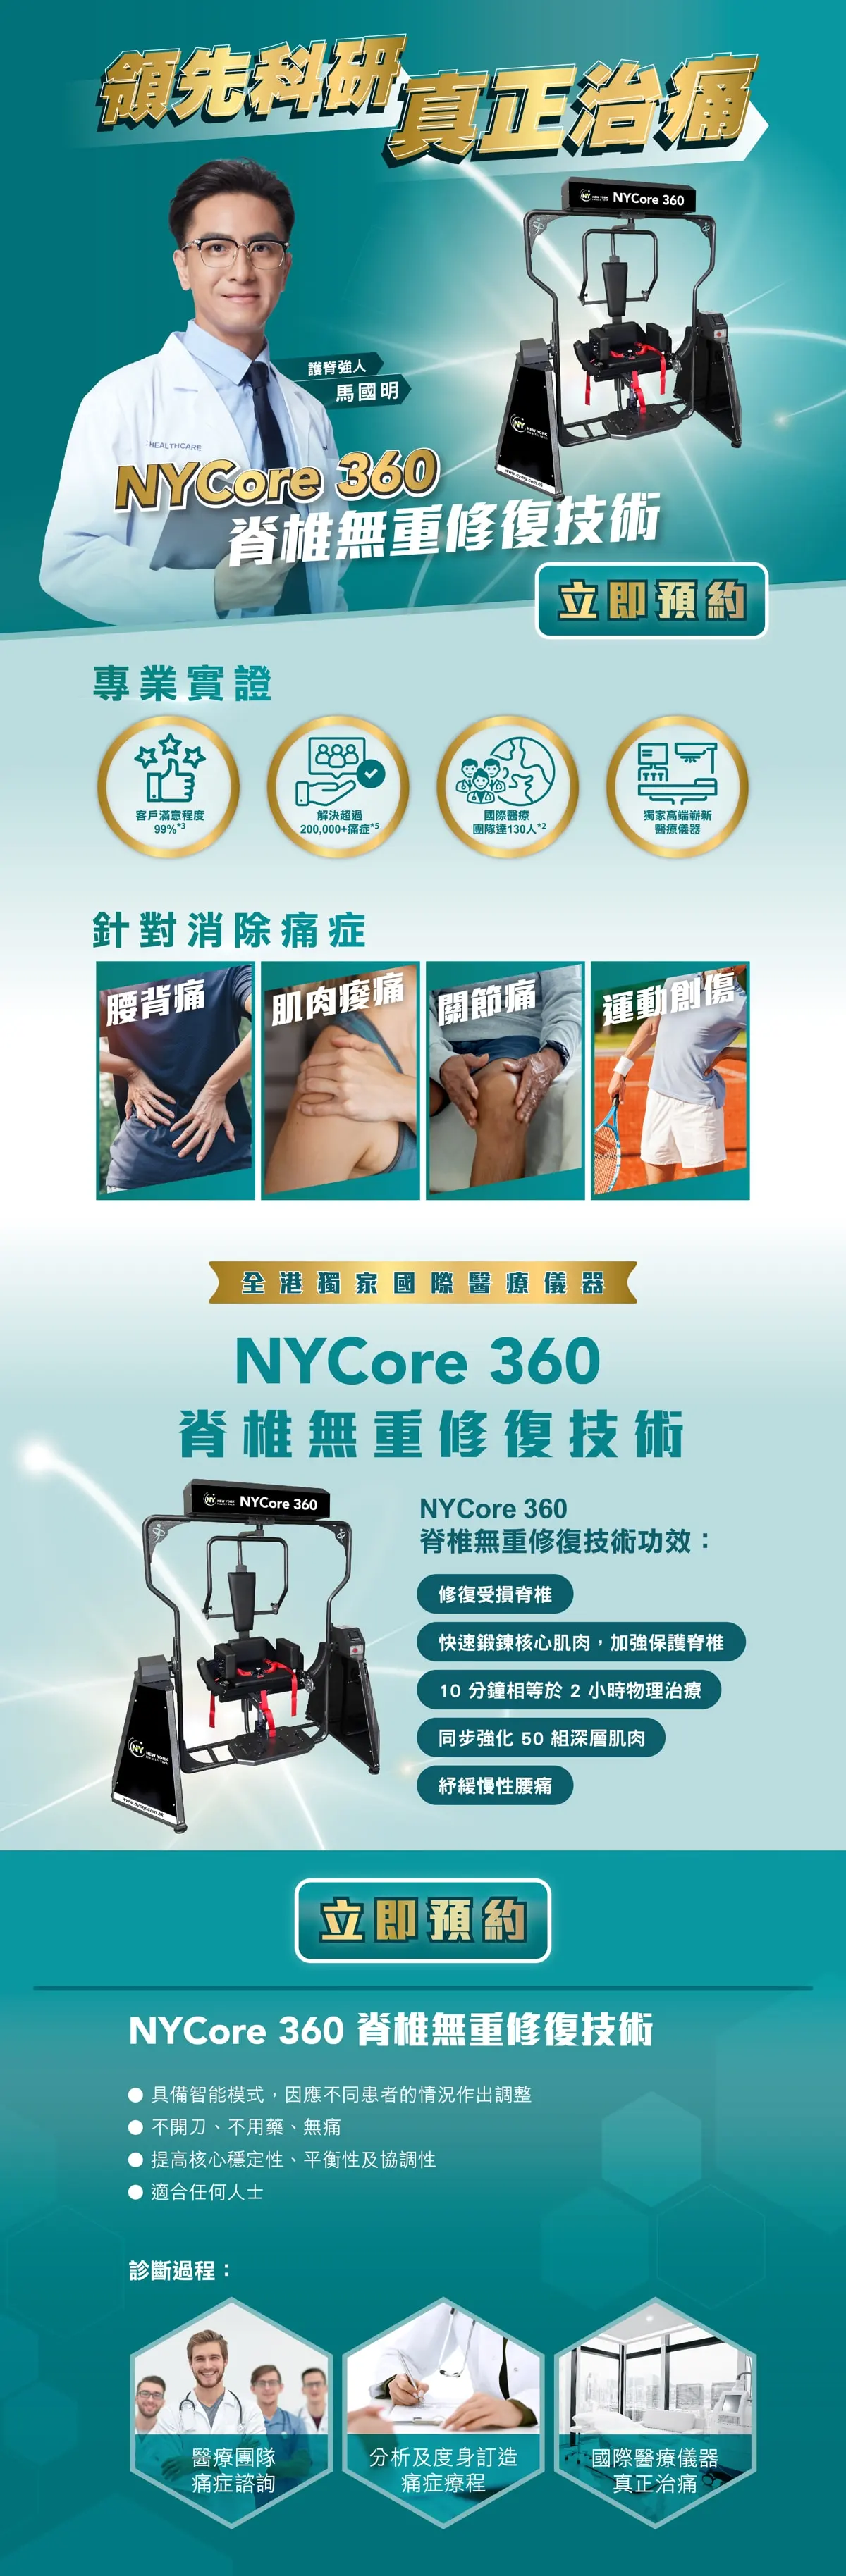 NYCore360 | 紐約脊骨及物理治療中心 | 熱線: (852) 6506 0189